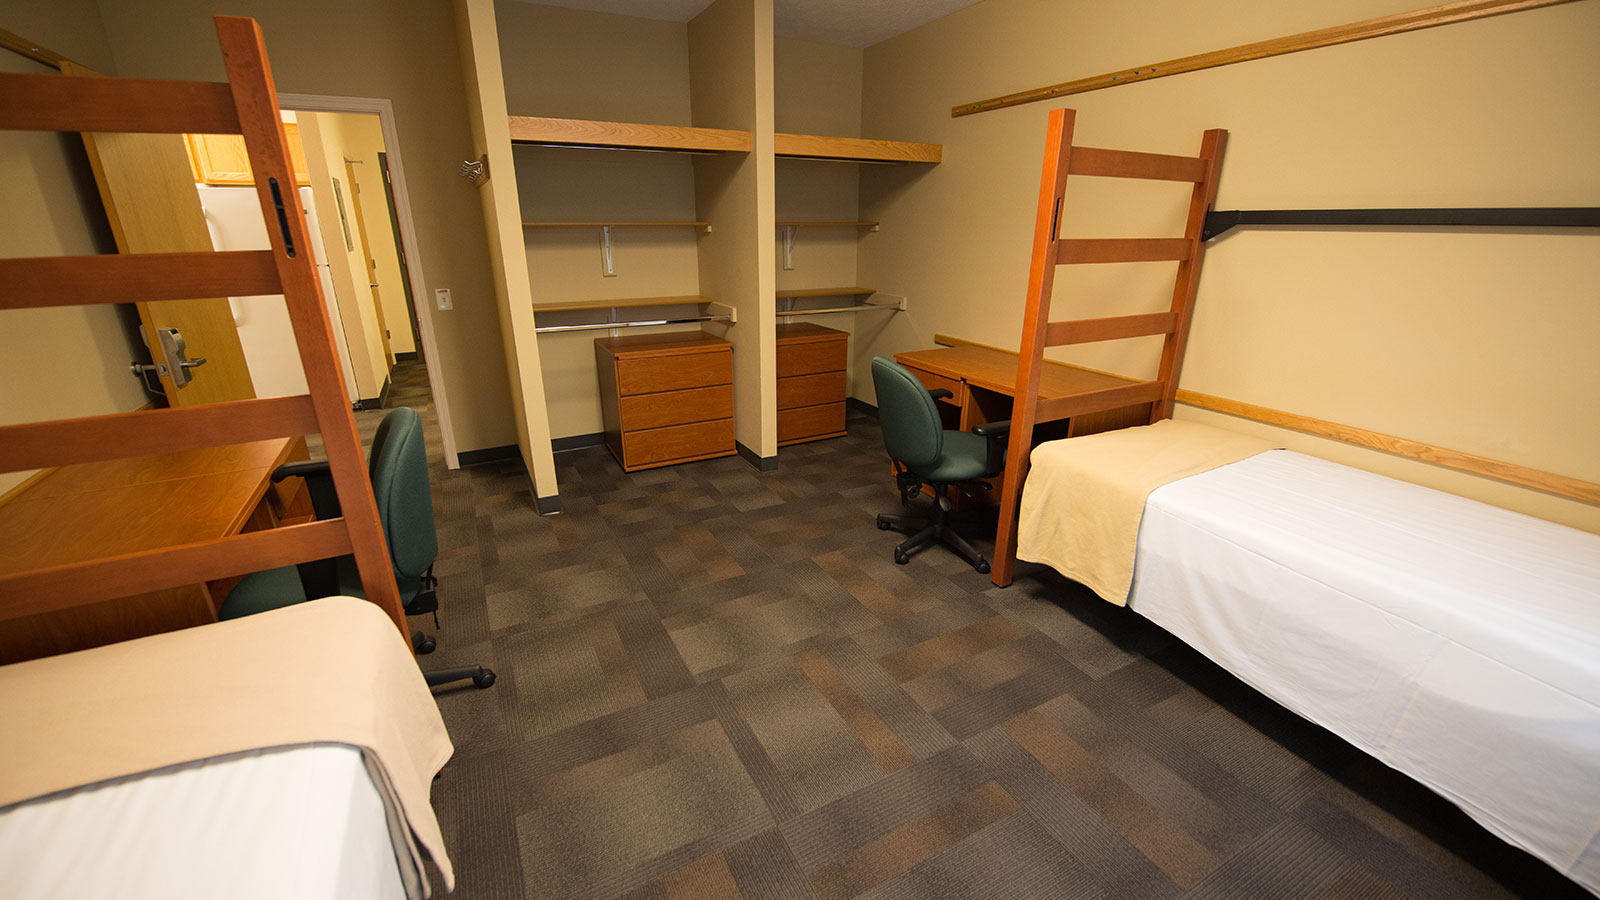 Double Bed dorm room